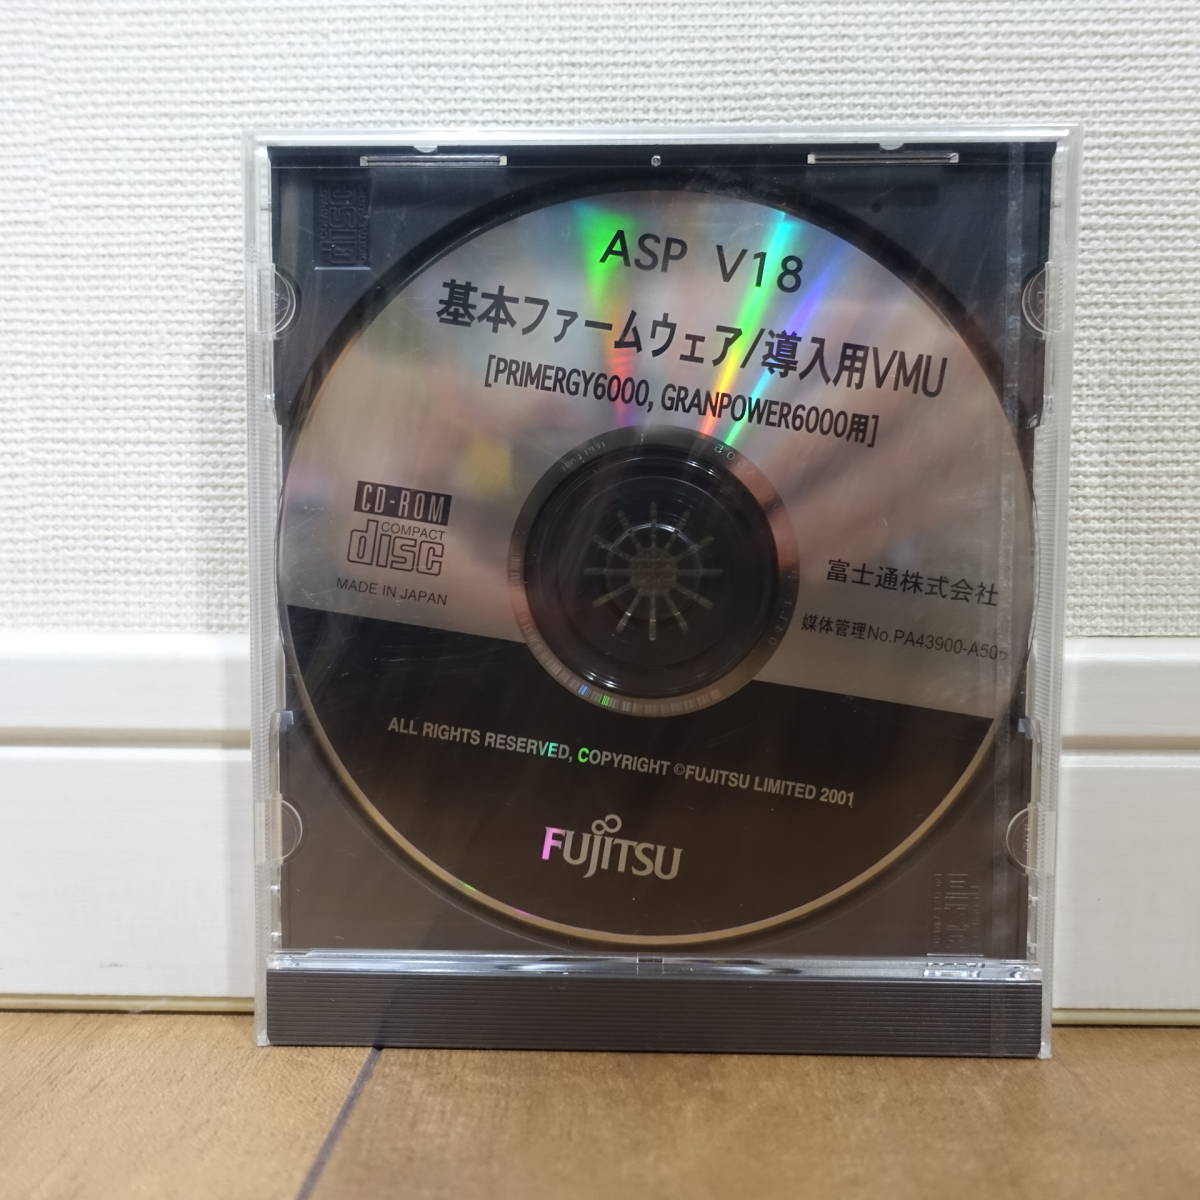 FUJITSU ASP V18 基本ファームウェア/導入用VMU [PRIMERGY6000, GRANPOWER6000用] CD 未開封_画像1